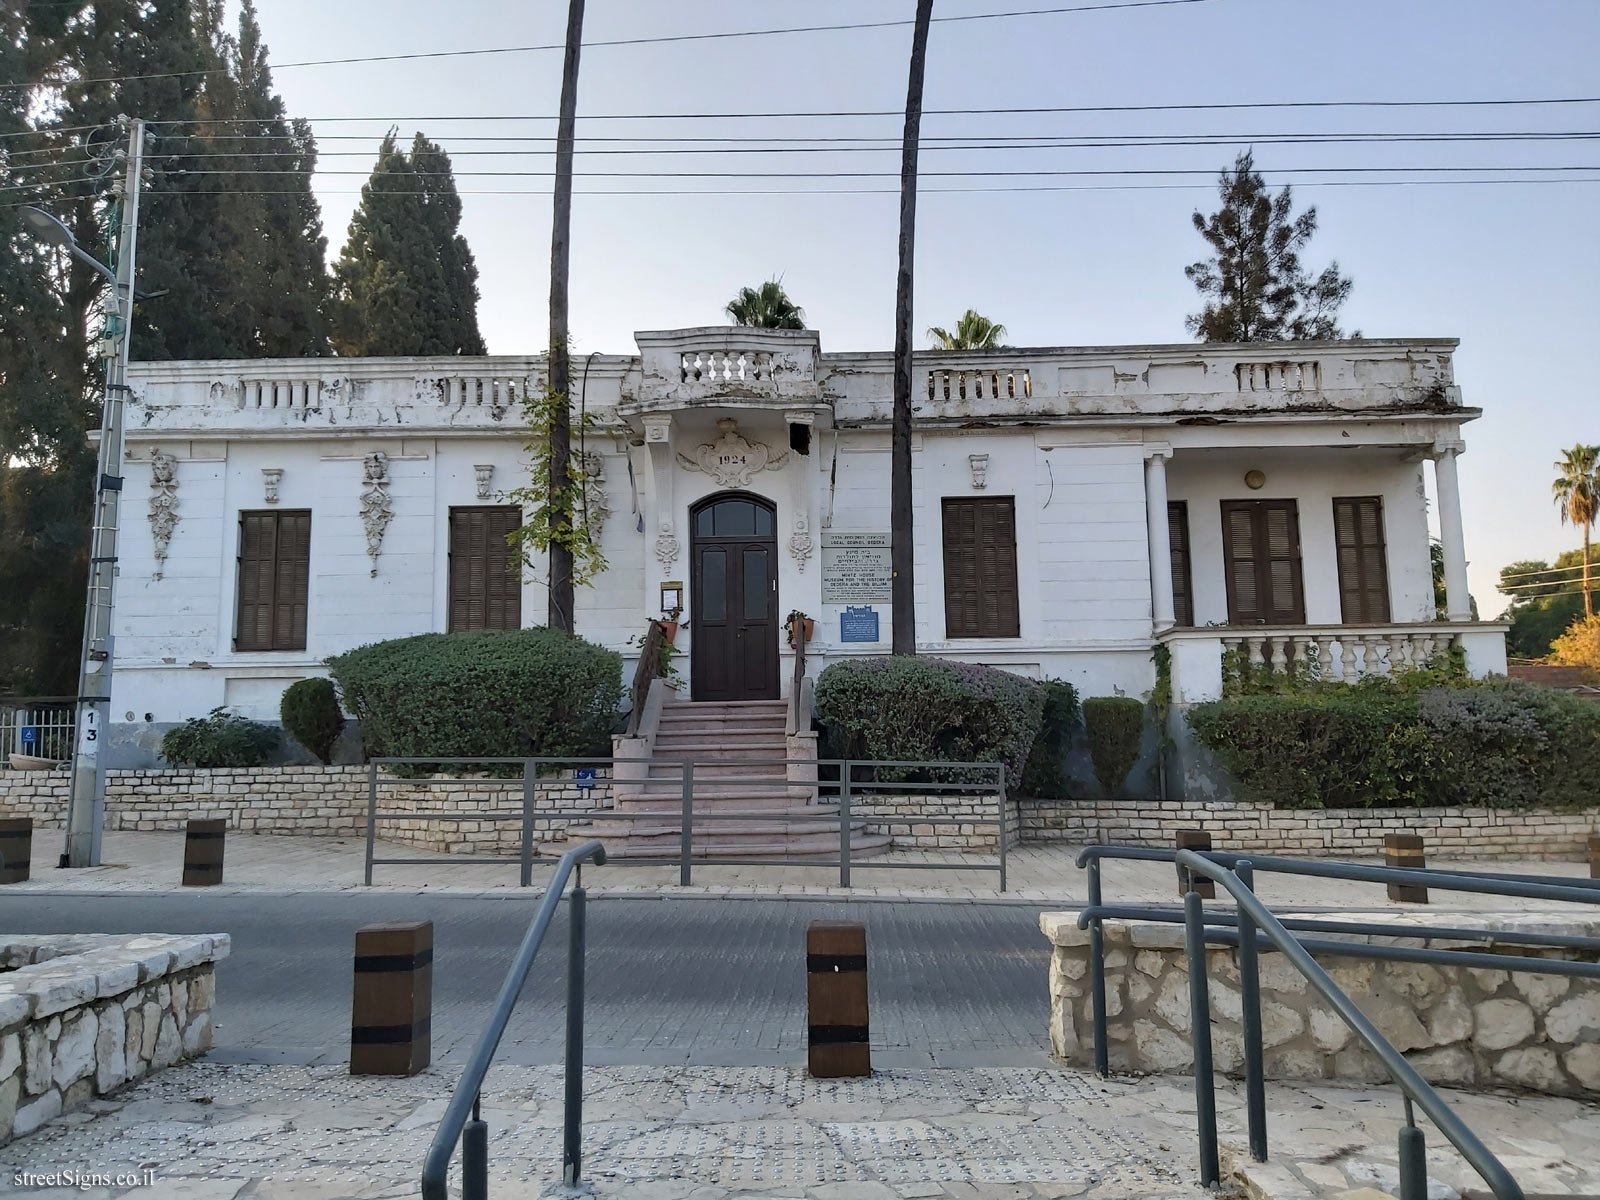 Mintz House - Gedera History Museum - Ha-Biluyim St 29, Gedera, Israel